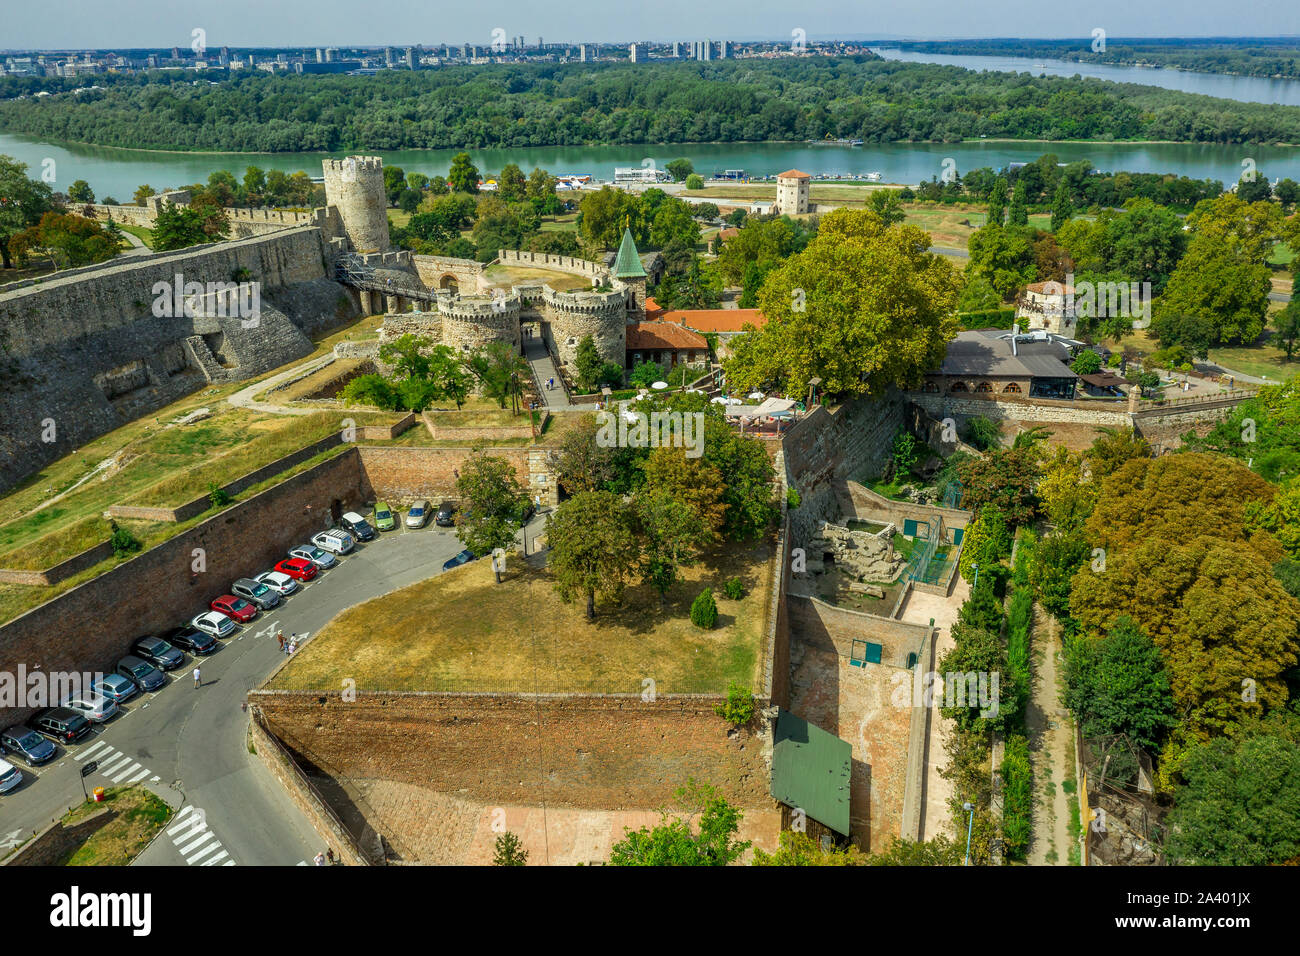 Aerial view of the Zindan gate, Zindan Kapija and Despot's Gate along with the Castellan Tower in Belgrade Castle in Serbia former Yugoslavia Stock Photo